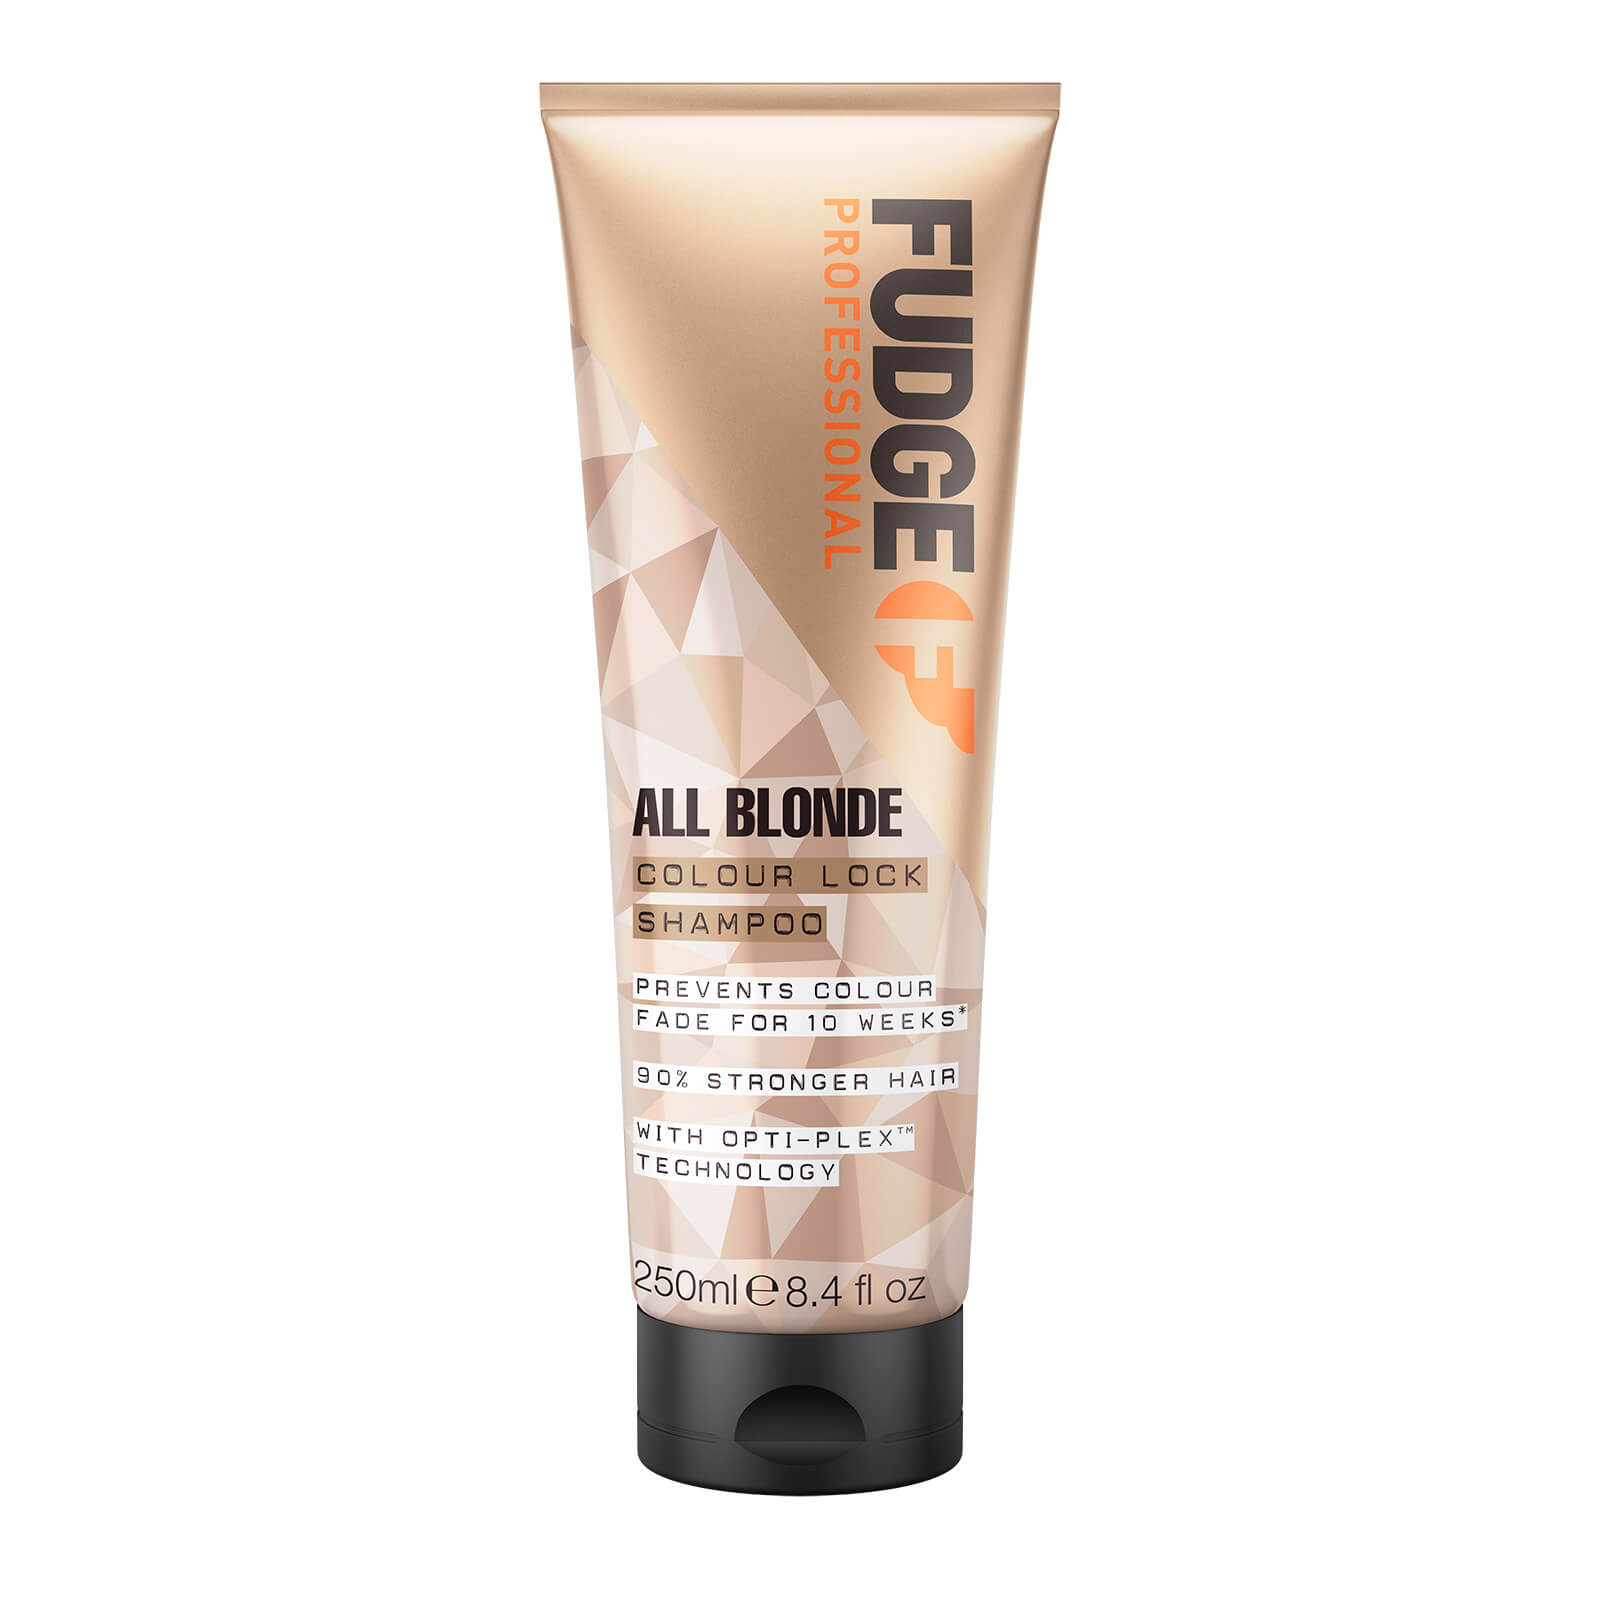 All Blonde Colour Lock Fudge Shampoo 250ml | Professional